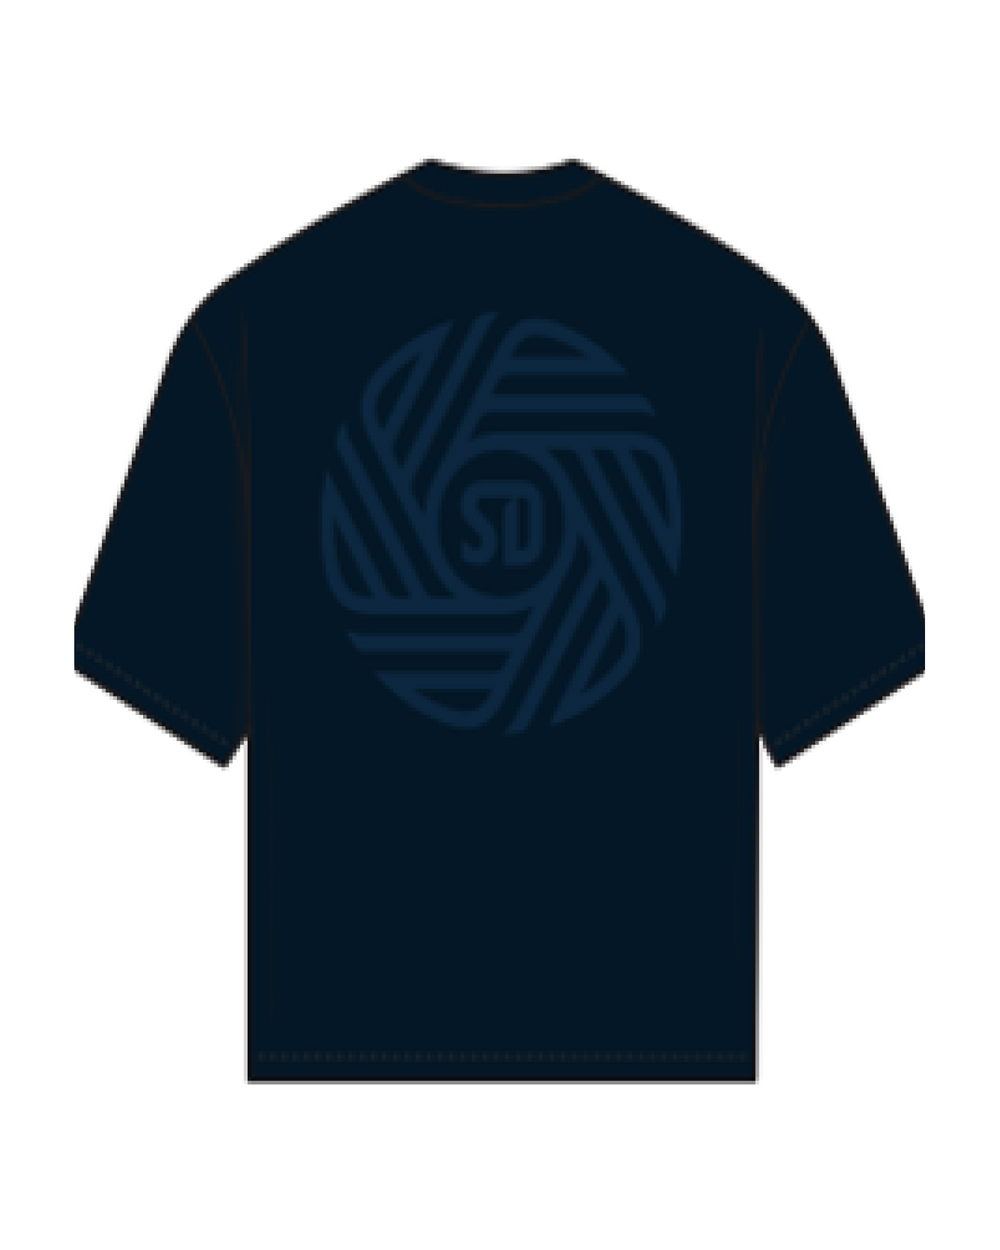 San Diego FC x LBF Pocket T-shirt Navy